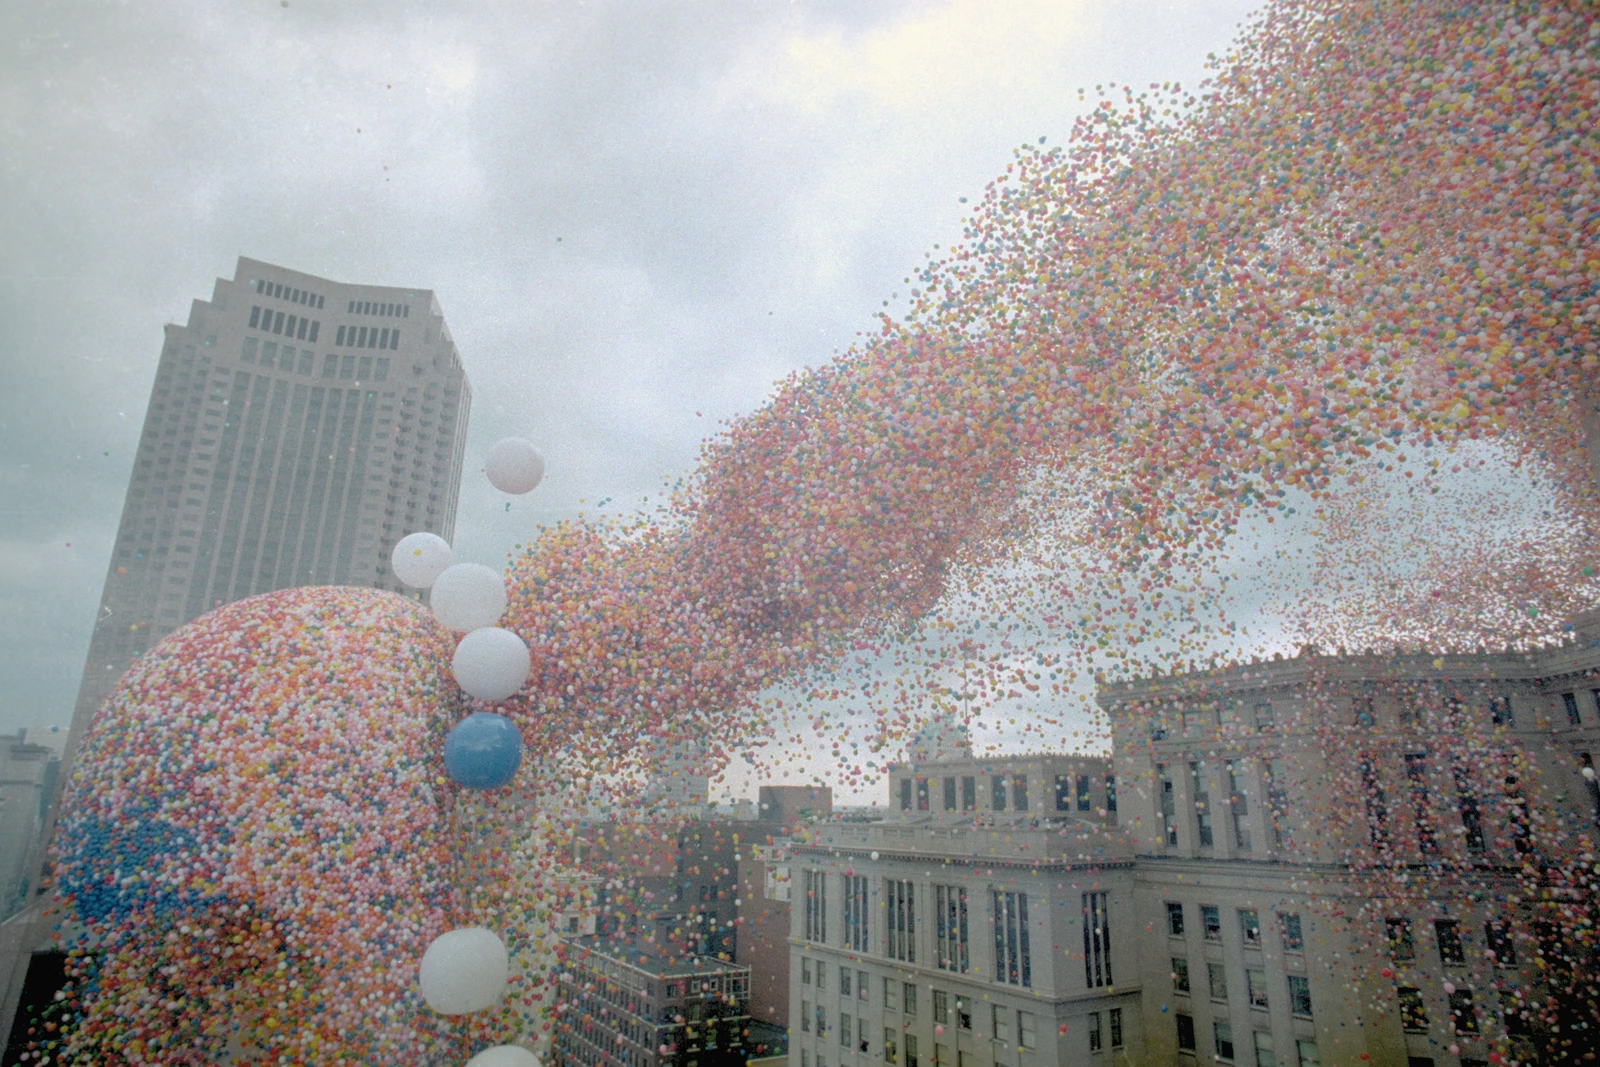 How Clevelands Balloonfest 86 Became a Public Disaster image